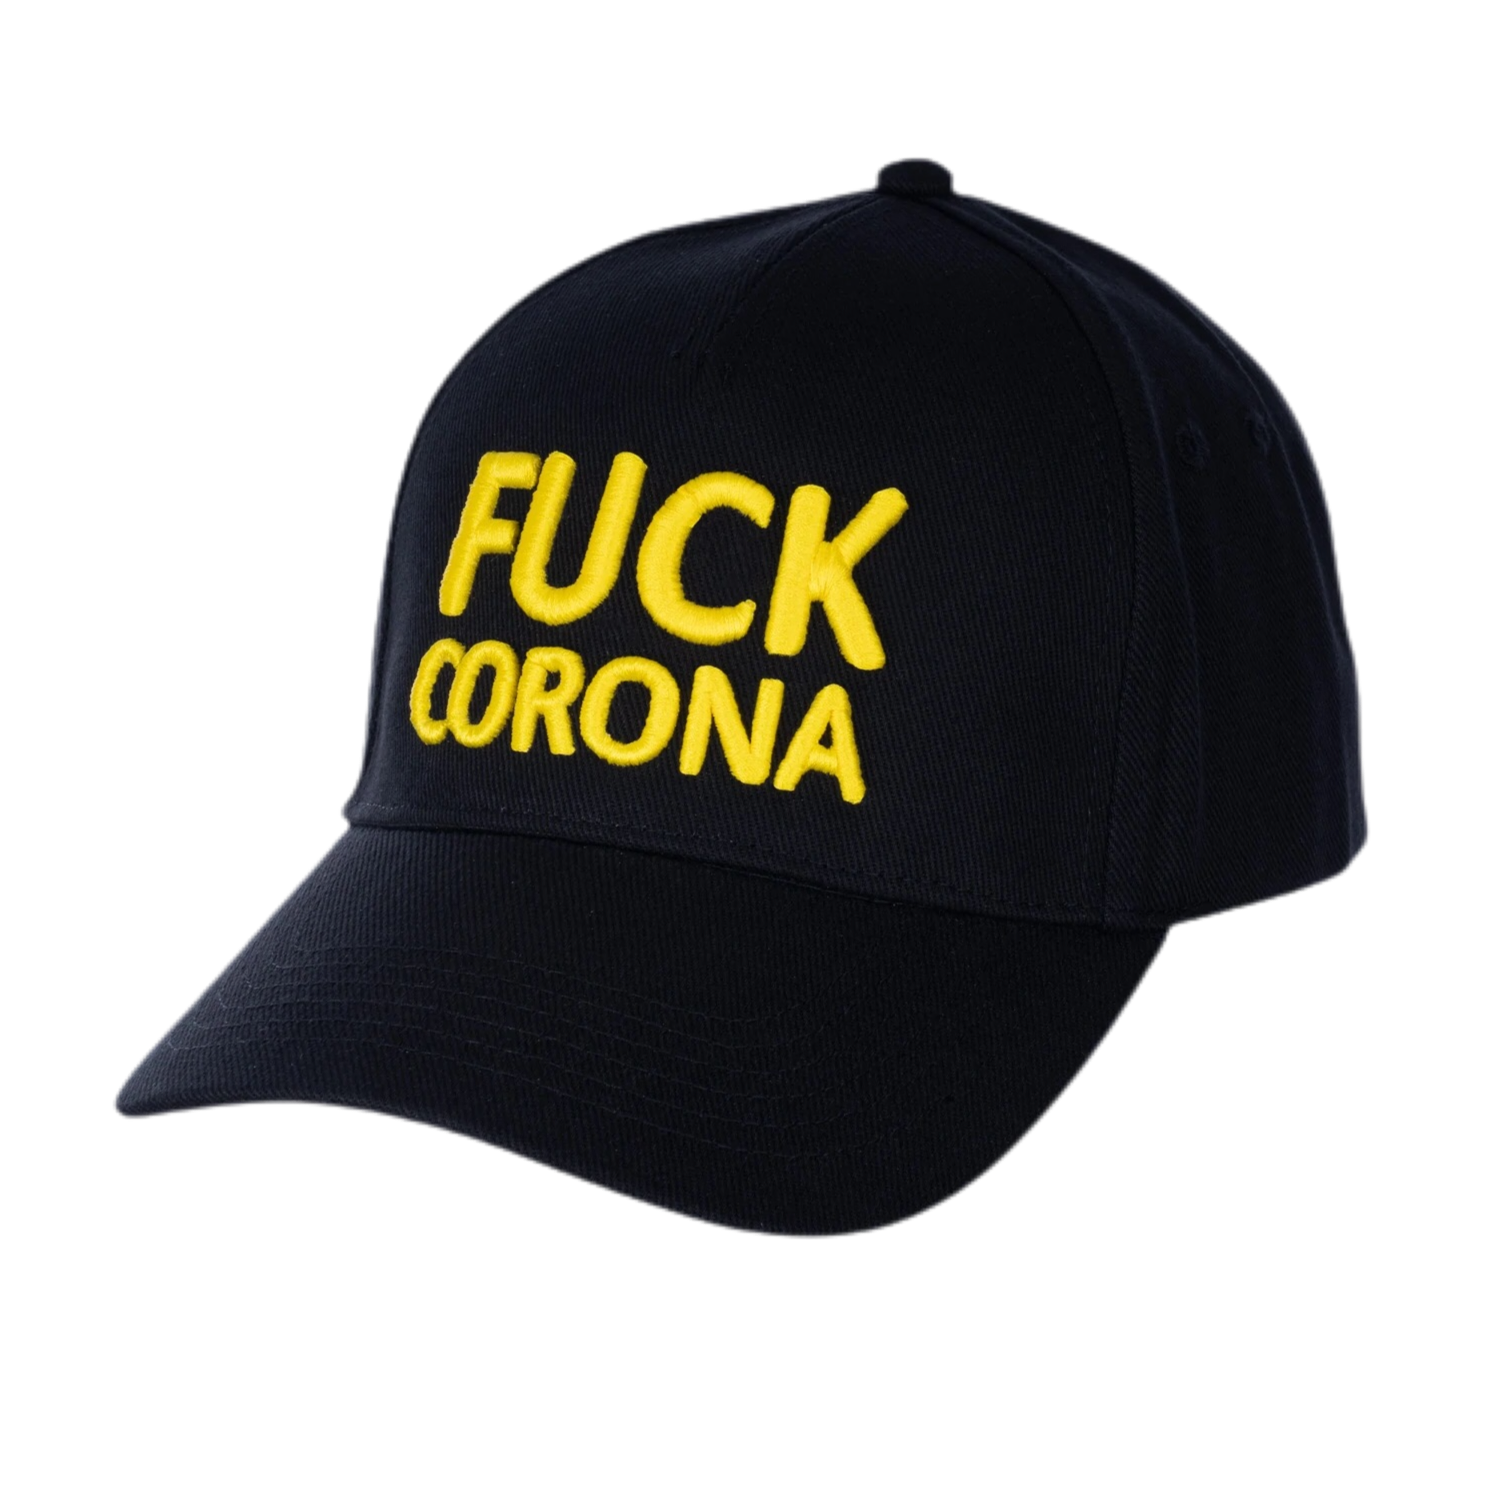 Kappe "Fuck Corona" schwarz-gelb